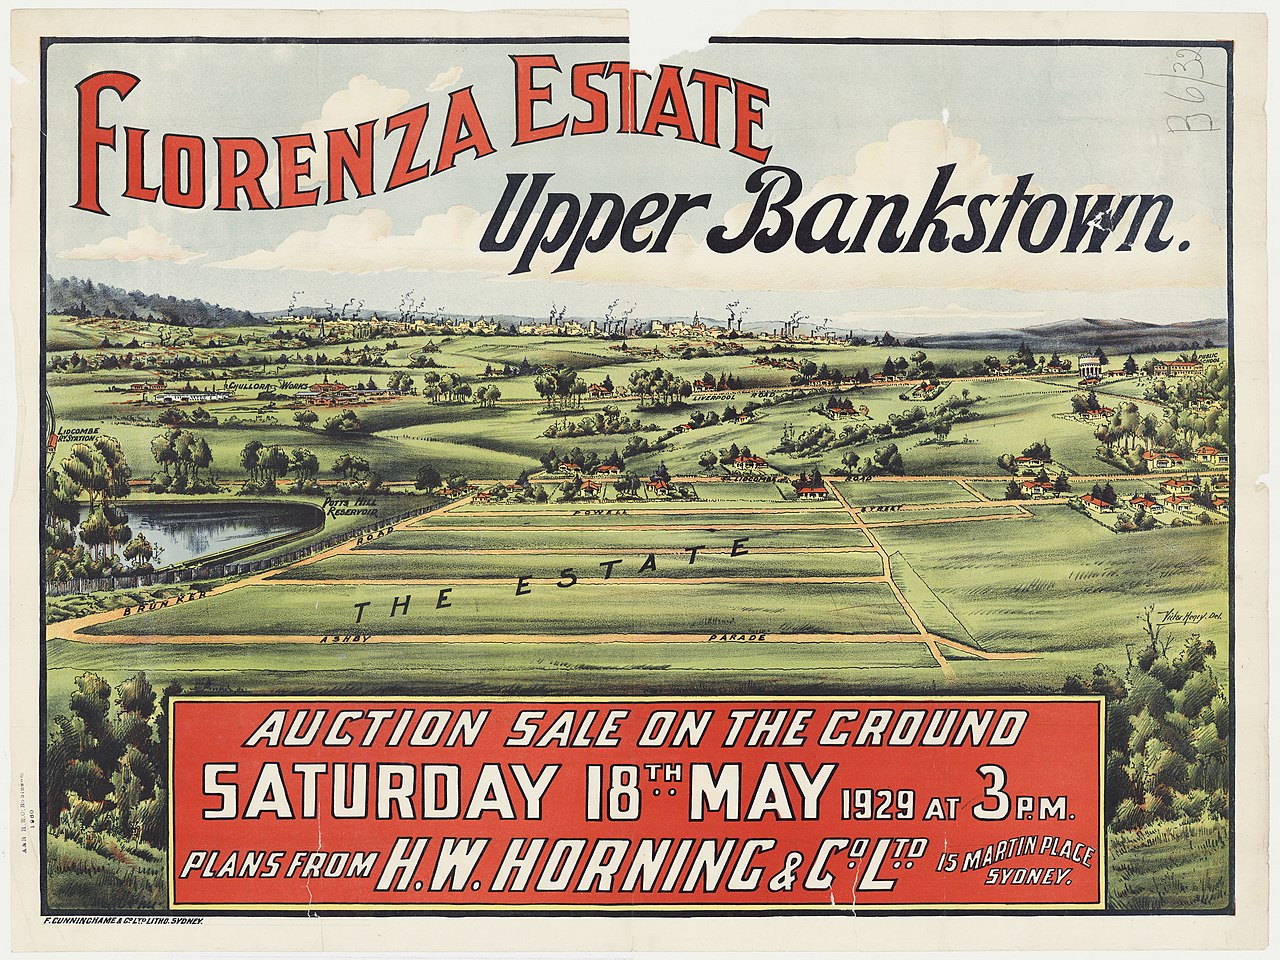 1280px-Florenza_Estate,_Upper_Bankstown,_1929.jpg